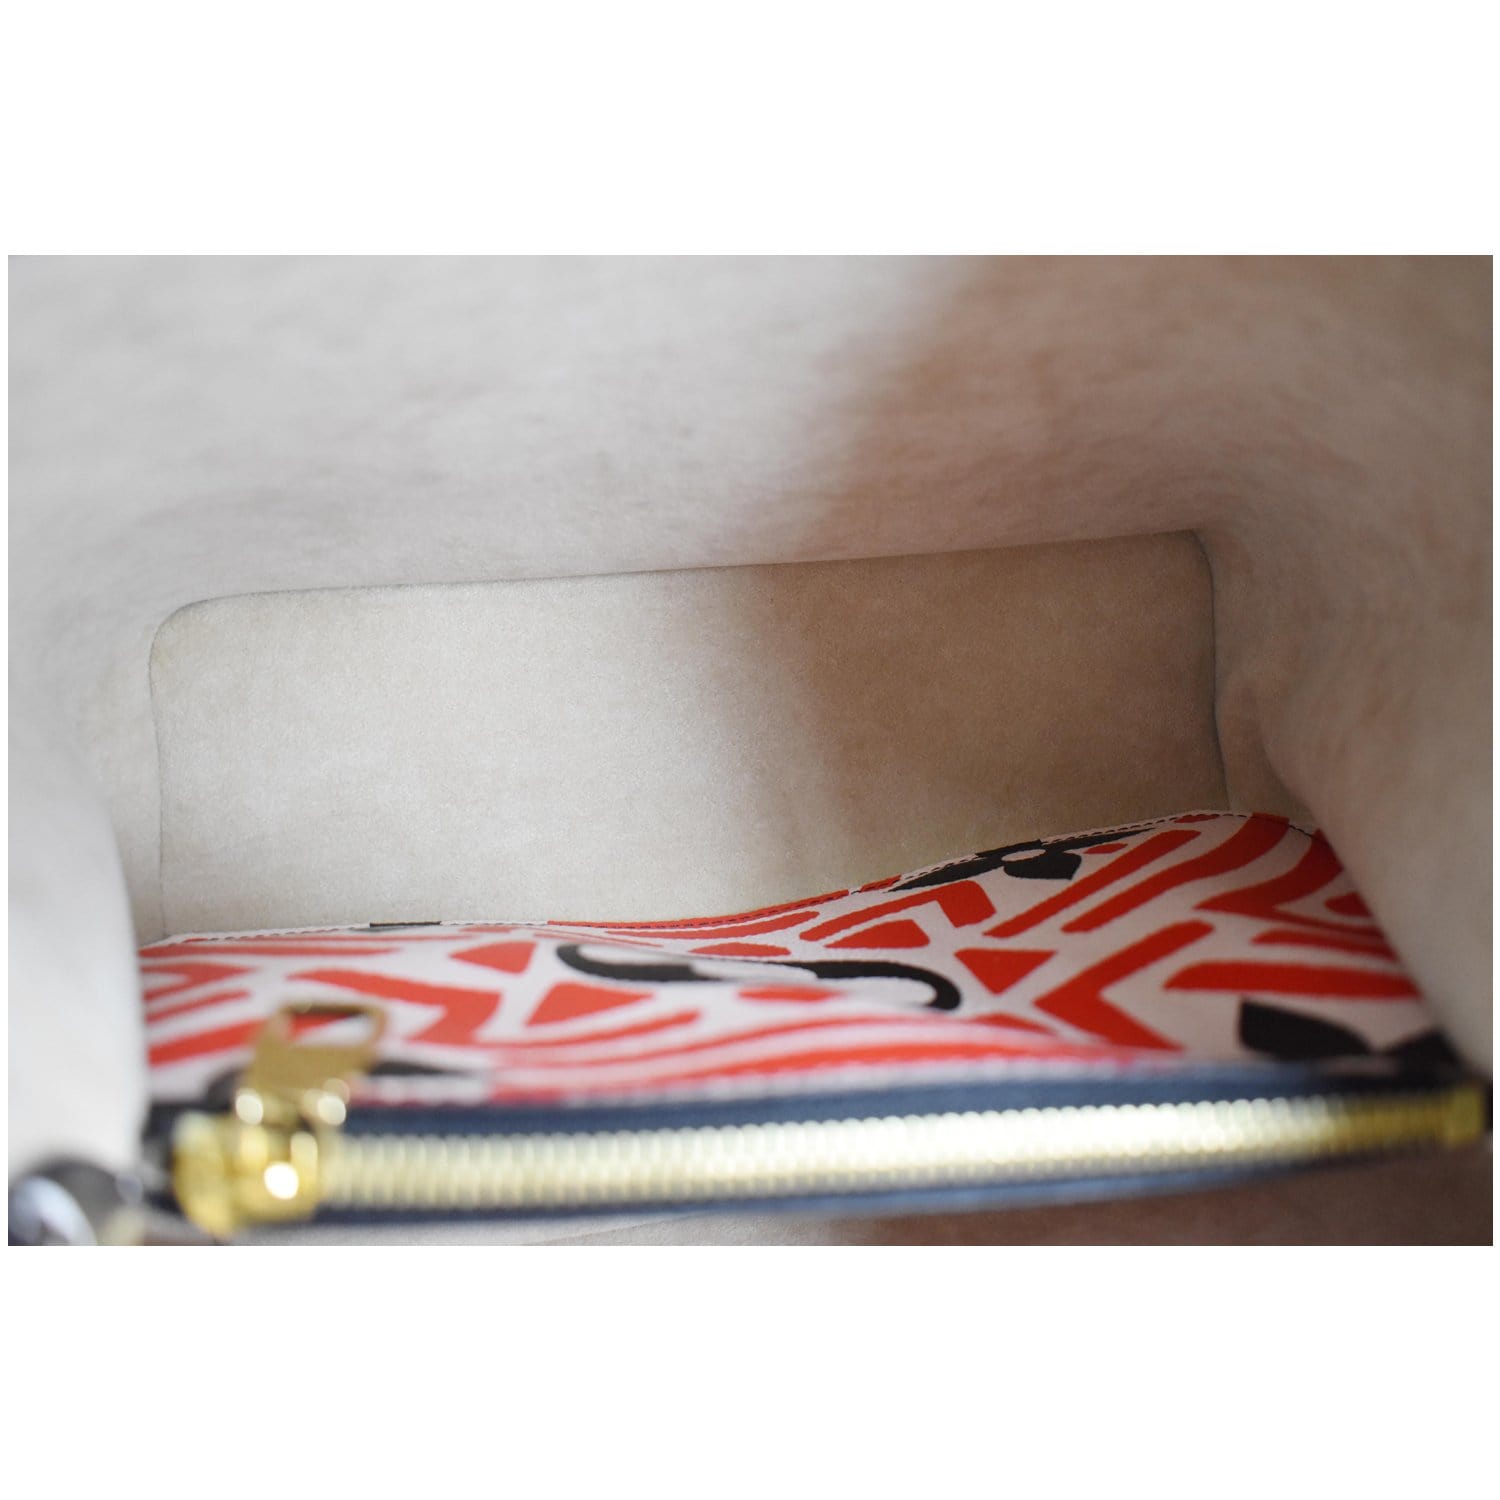 Louis Vuitton Crafty NeoNoe MM Bag – ZAK BAGS ©️